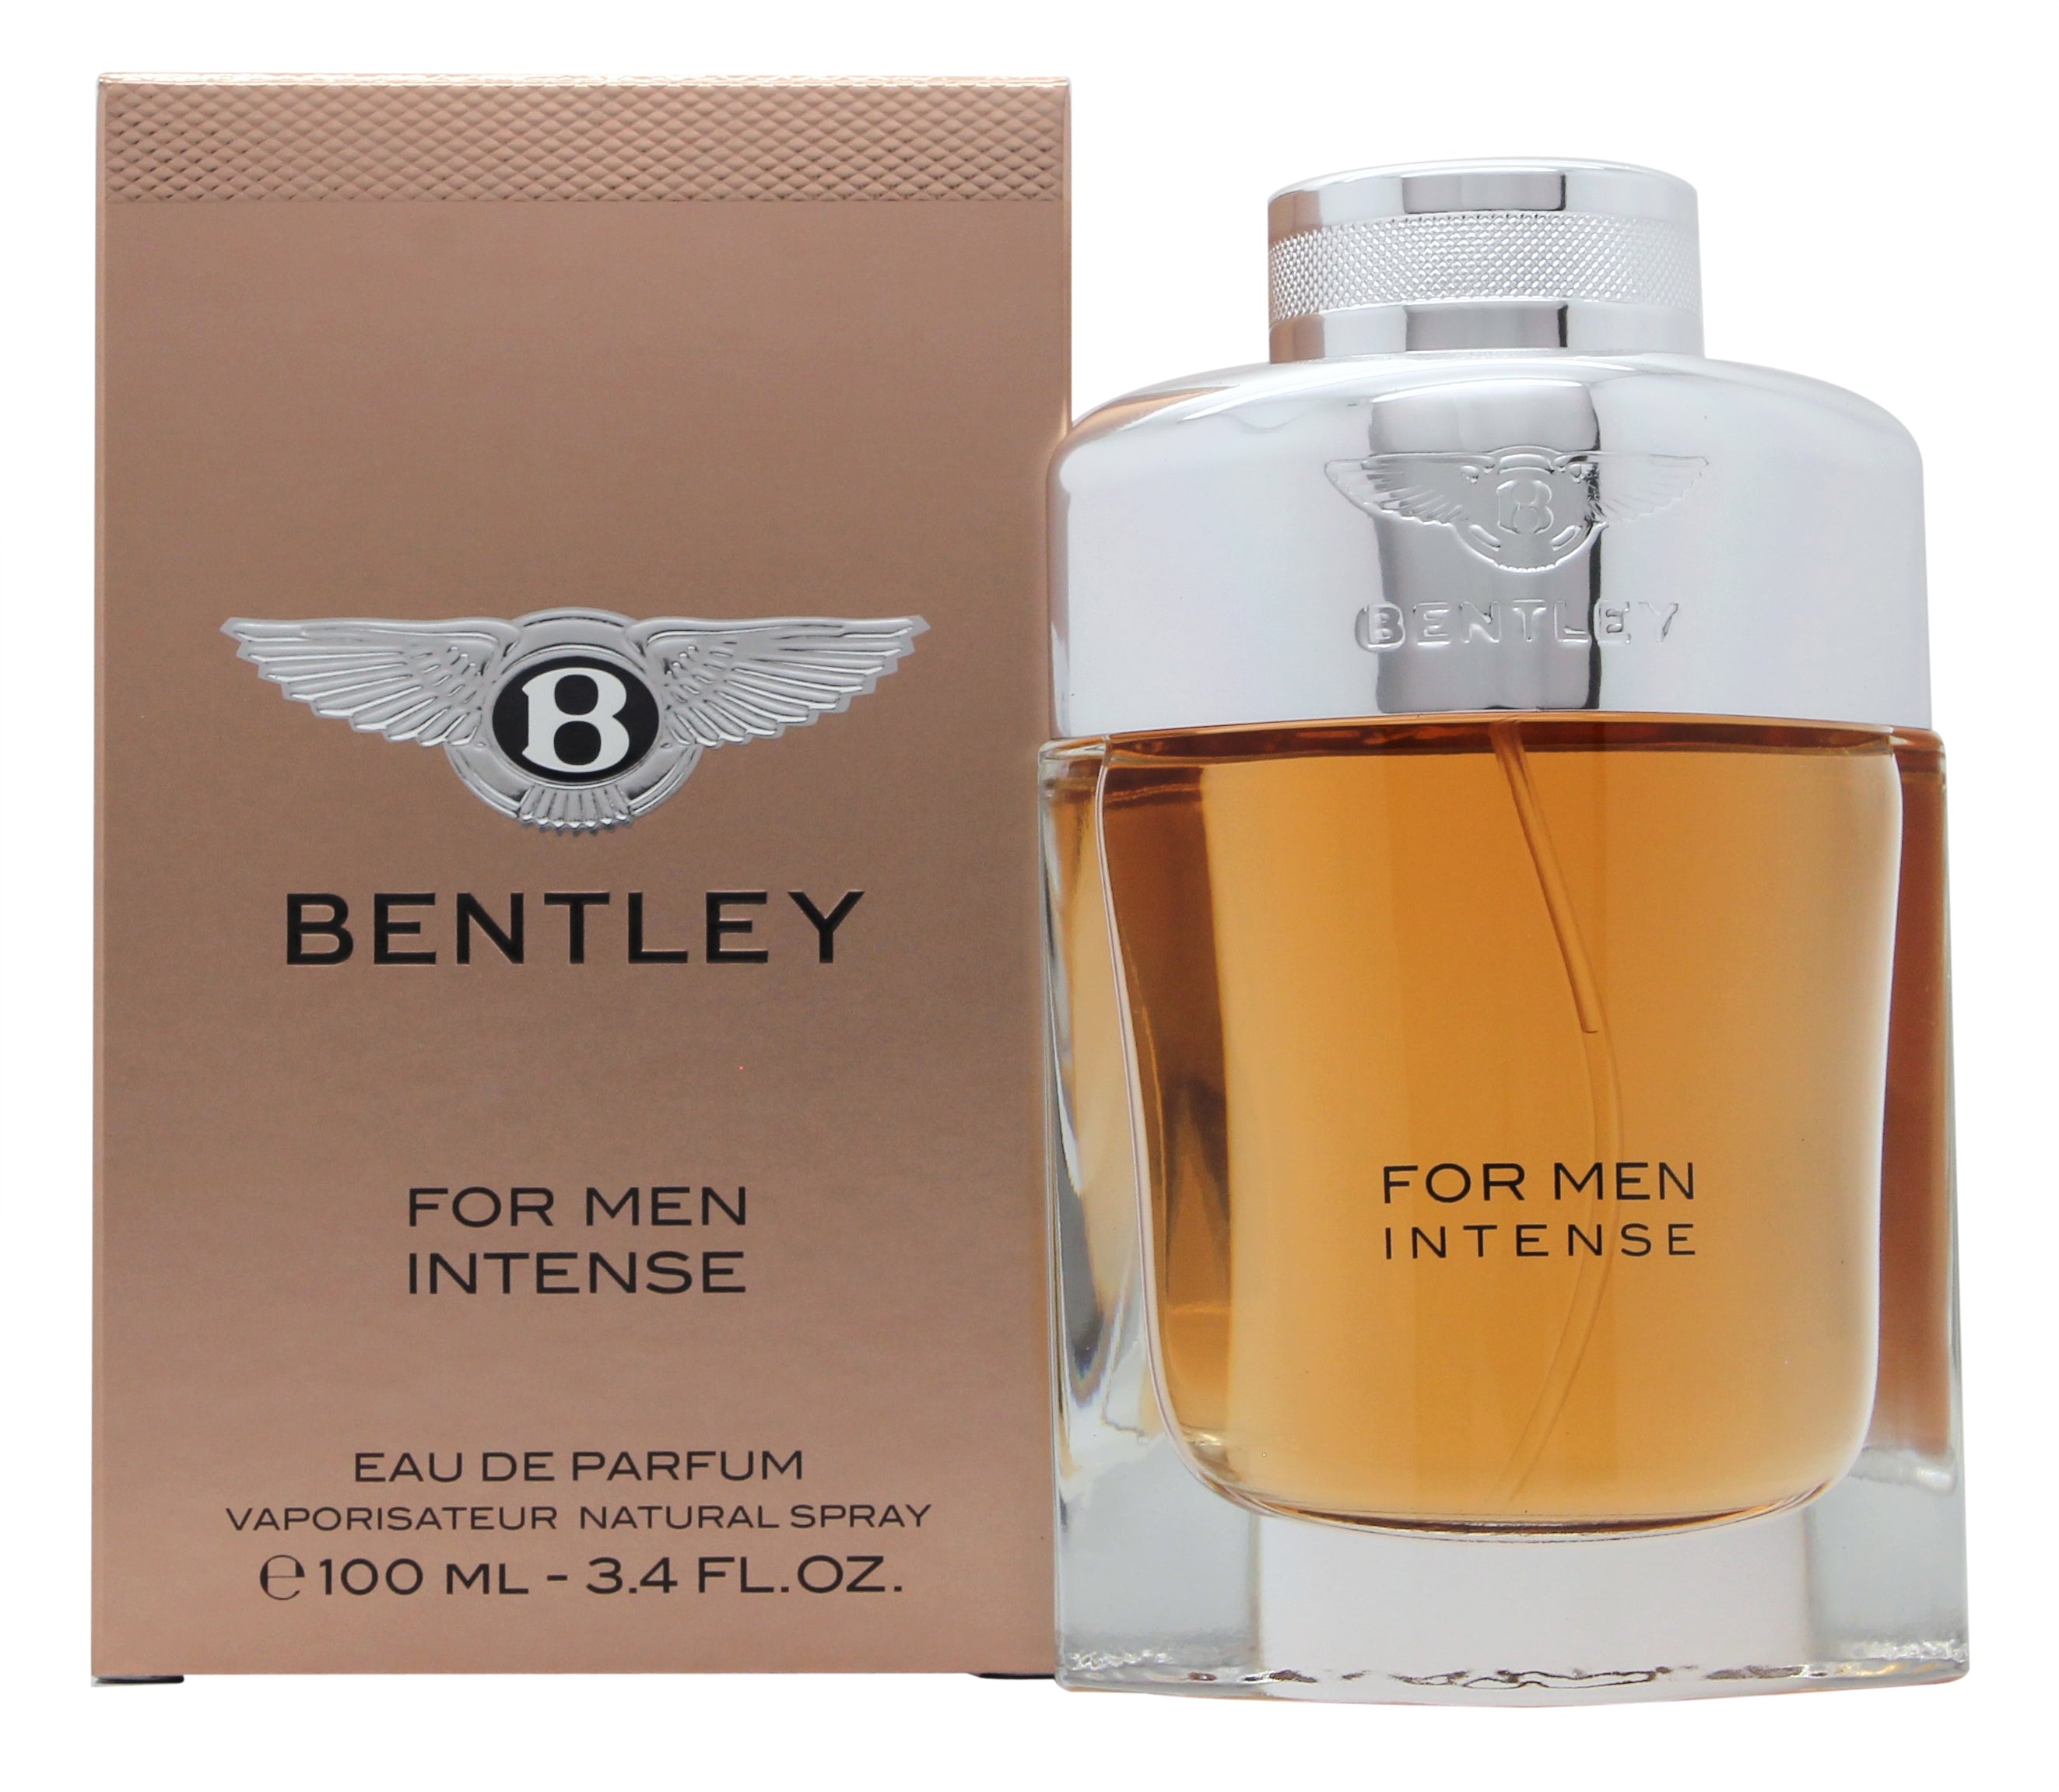 View Bentley Intense for Men Eau de Parfum 100ml Spray information